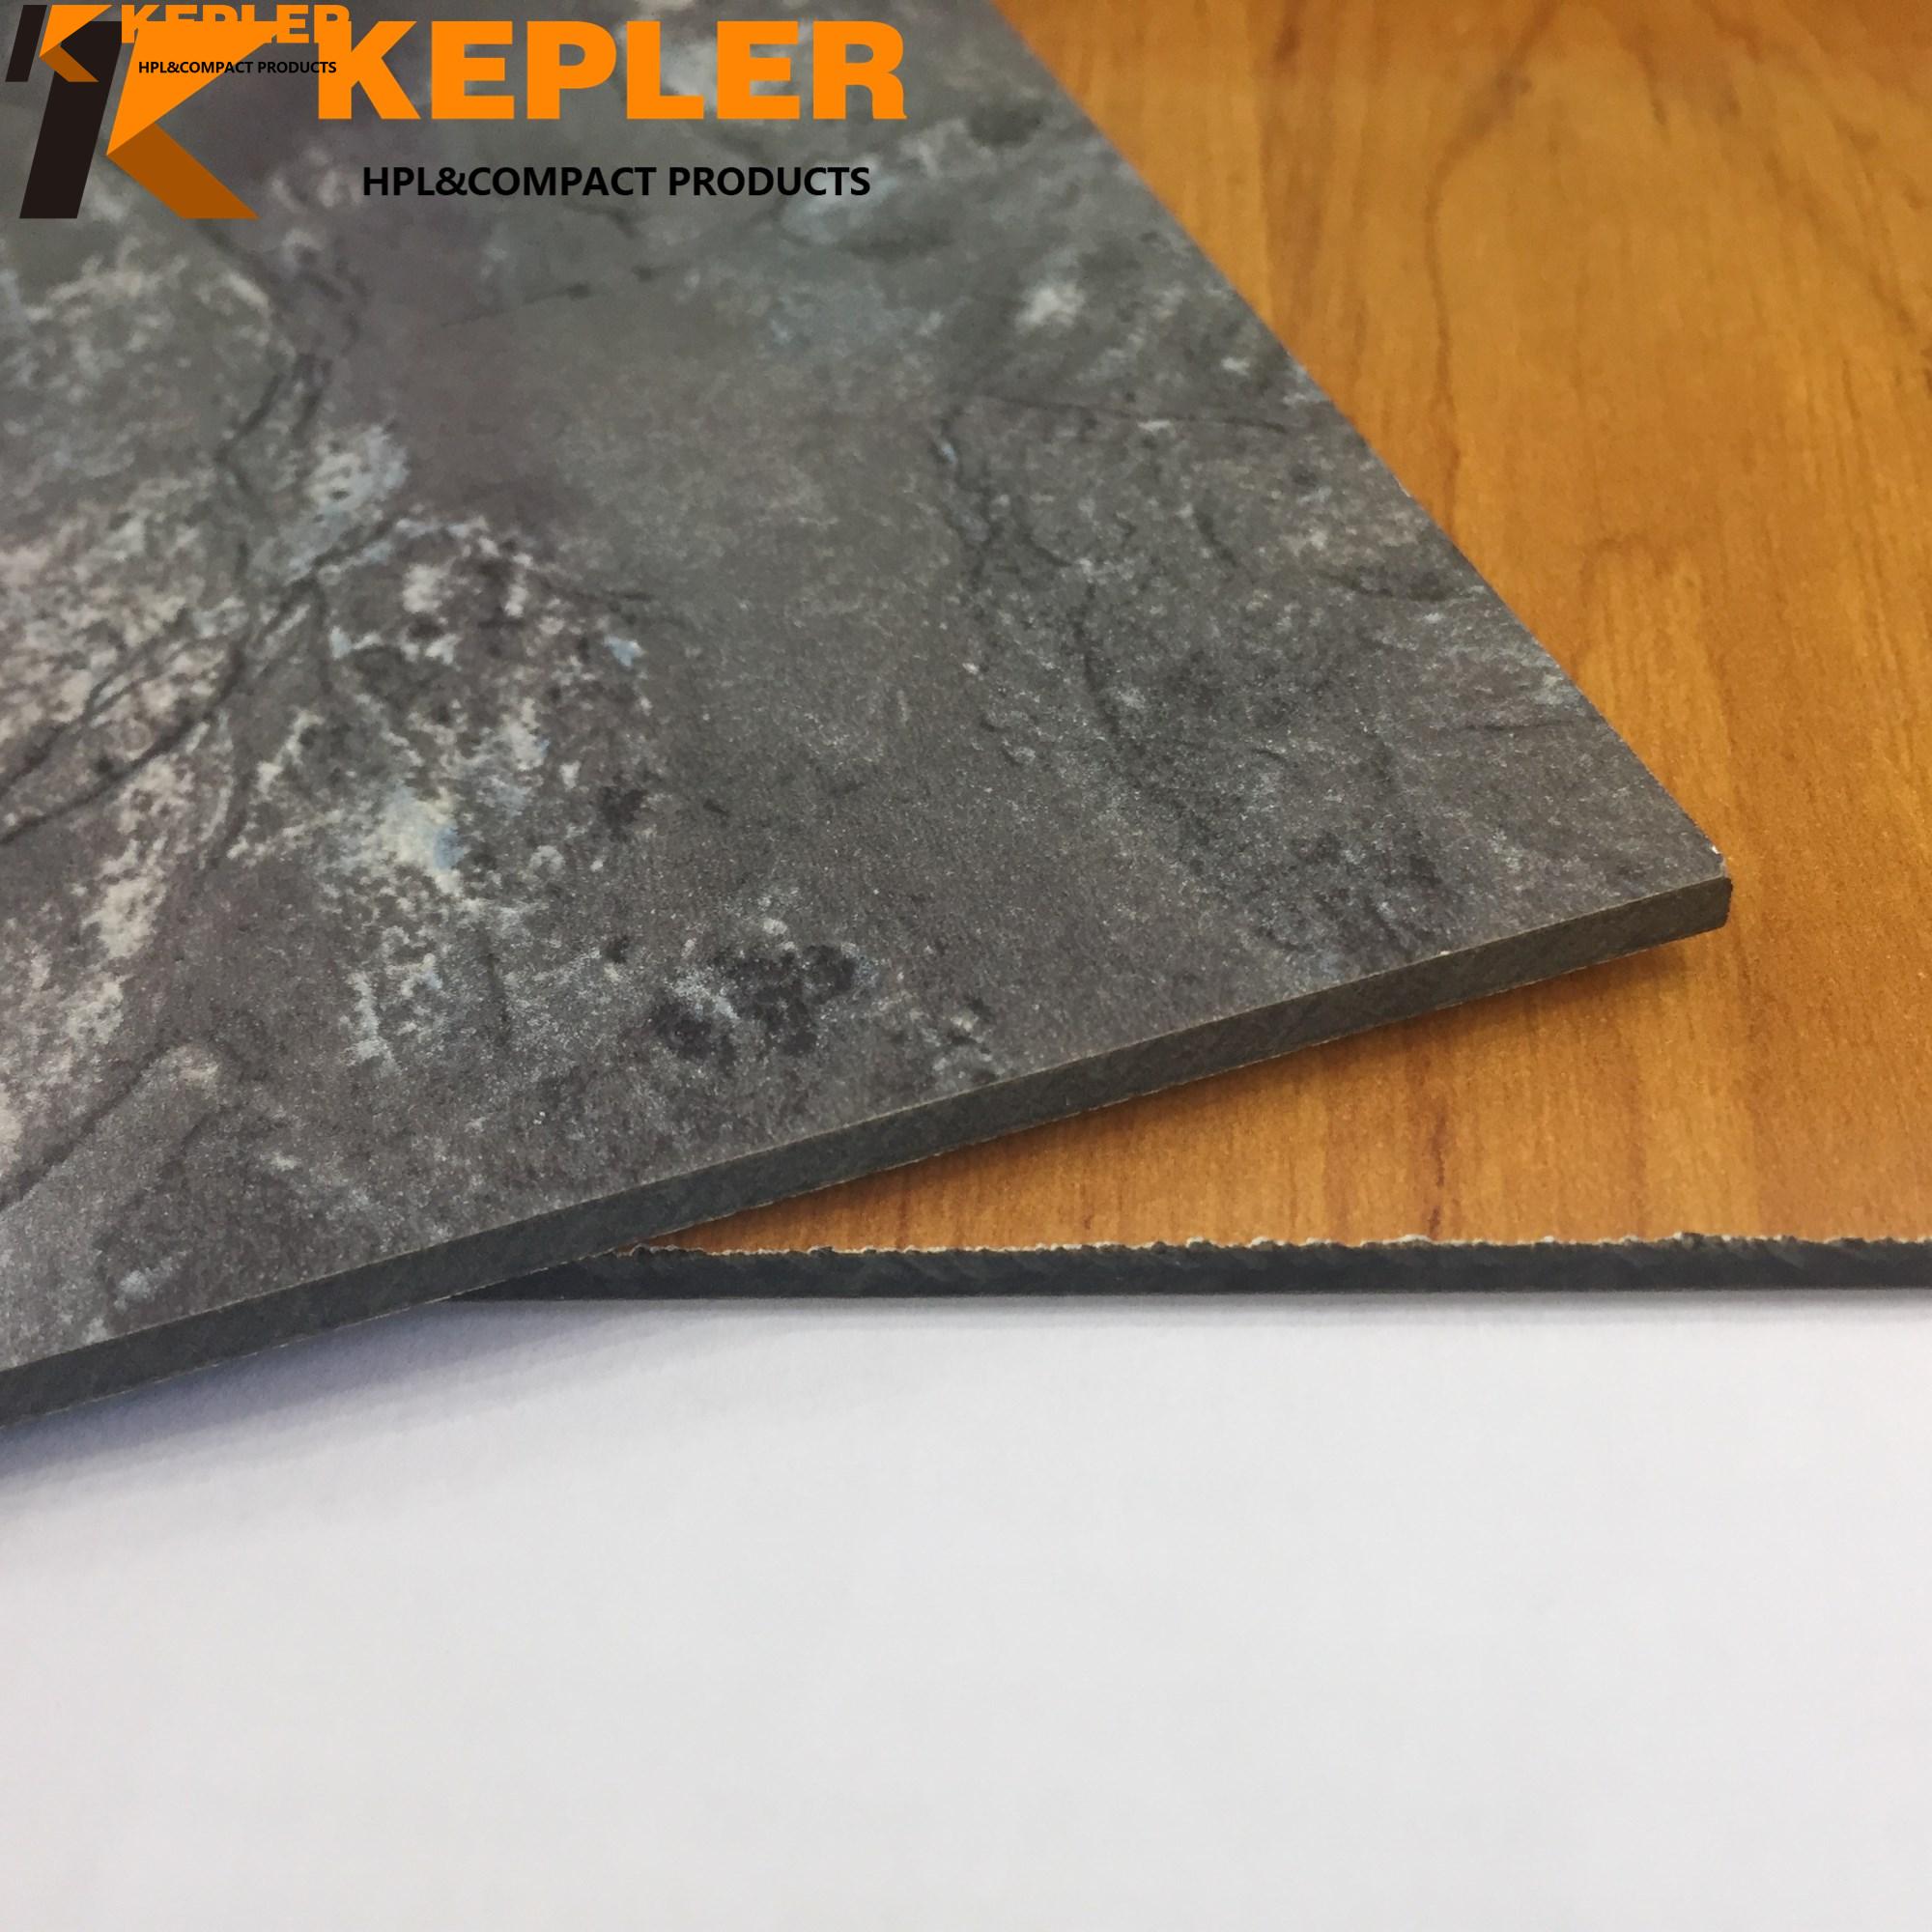 Kepler HPL phenolic compact laminate board